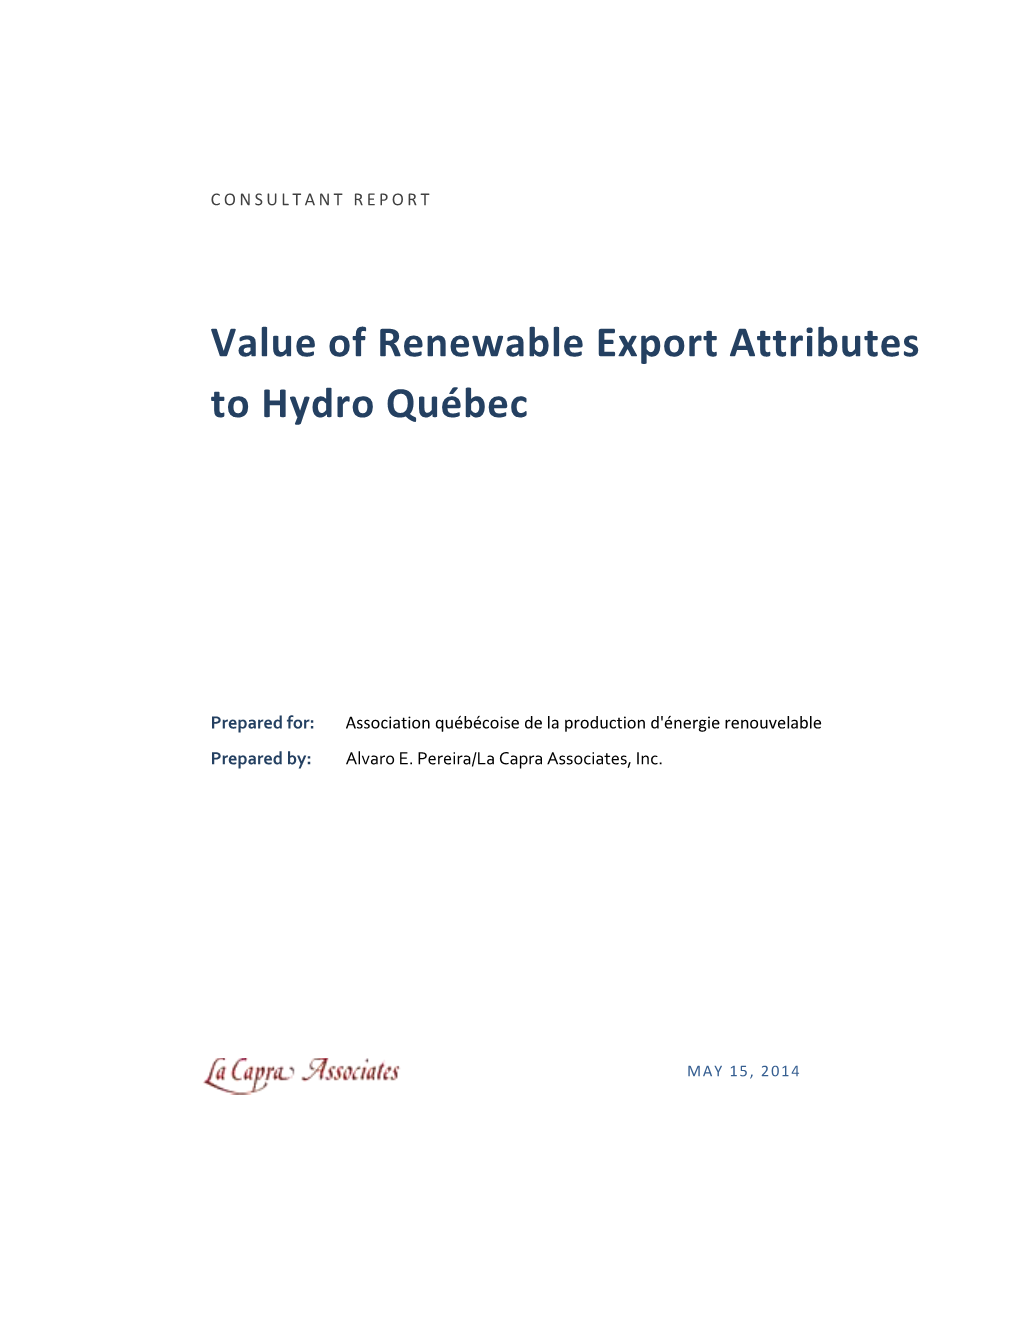 Value of Renewable Export Attributes to Hydro Québec